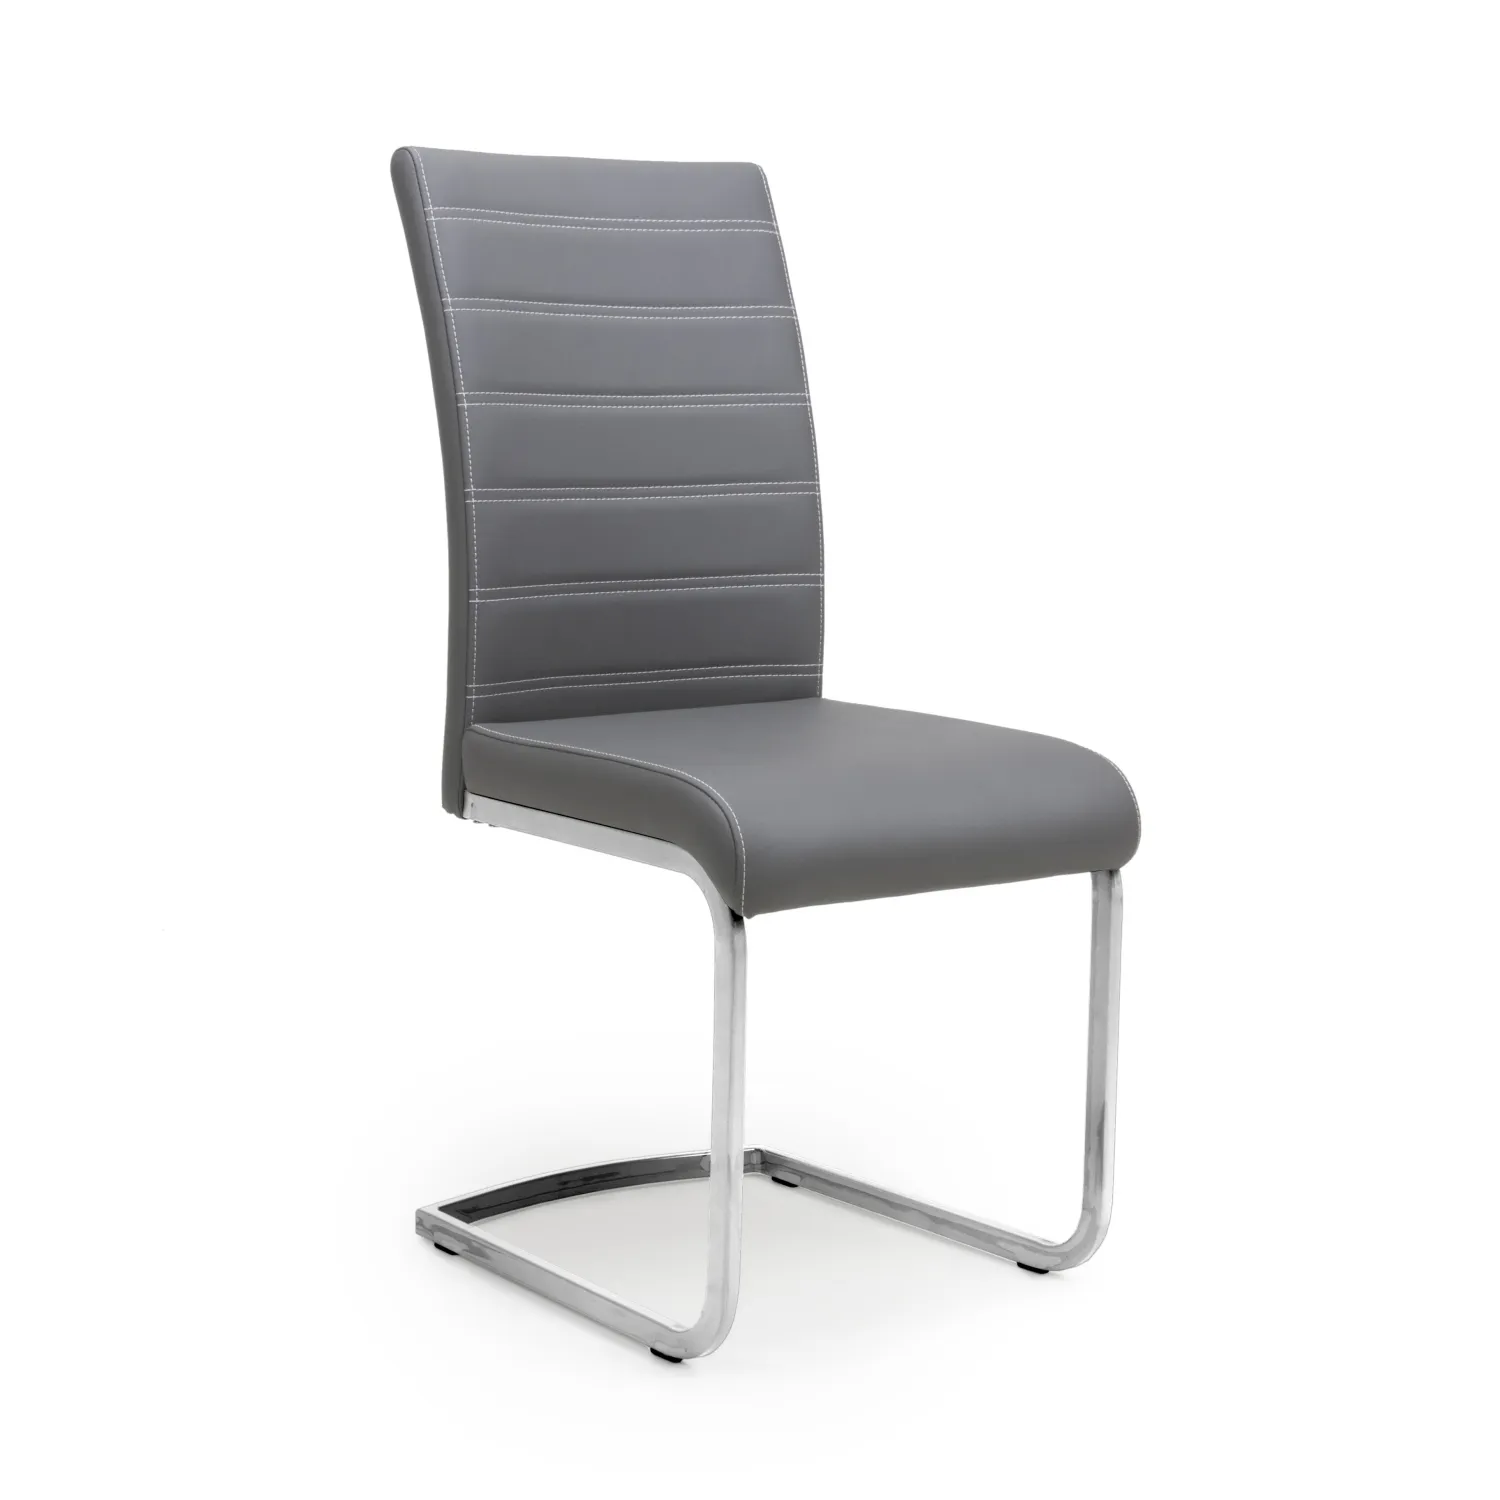 Dark Grey Leather Dining Chair White Stitching